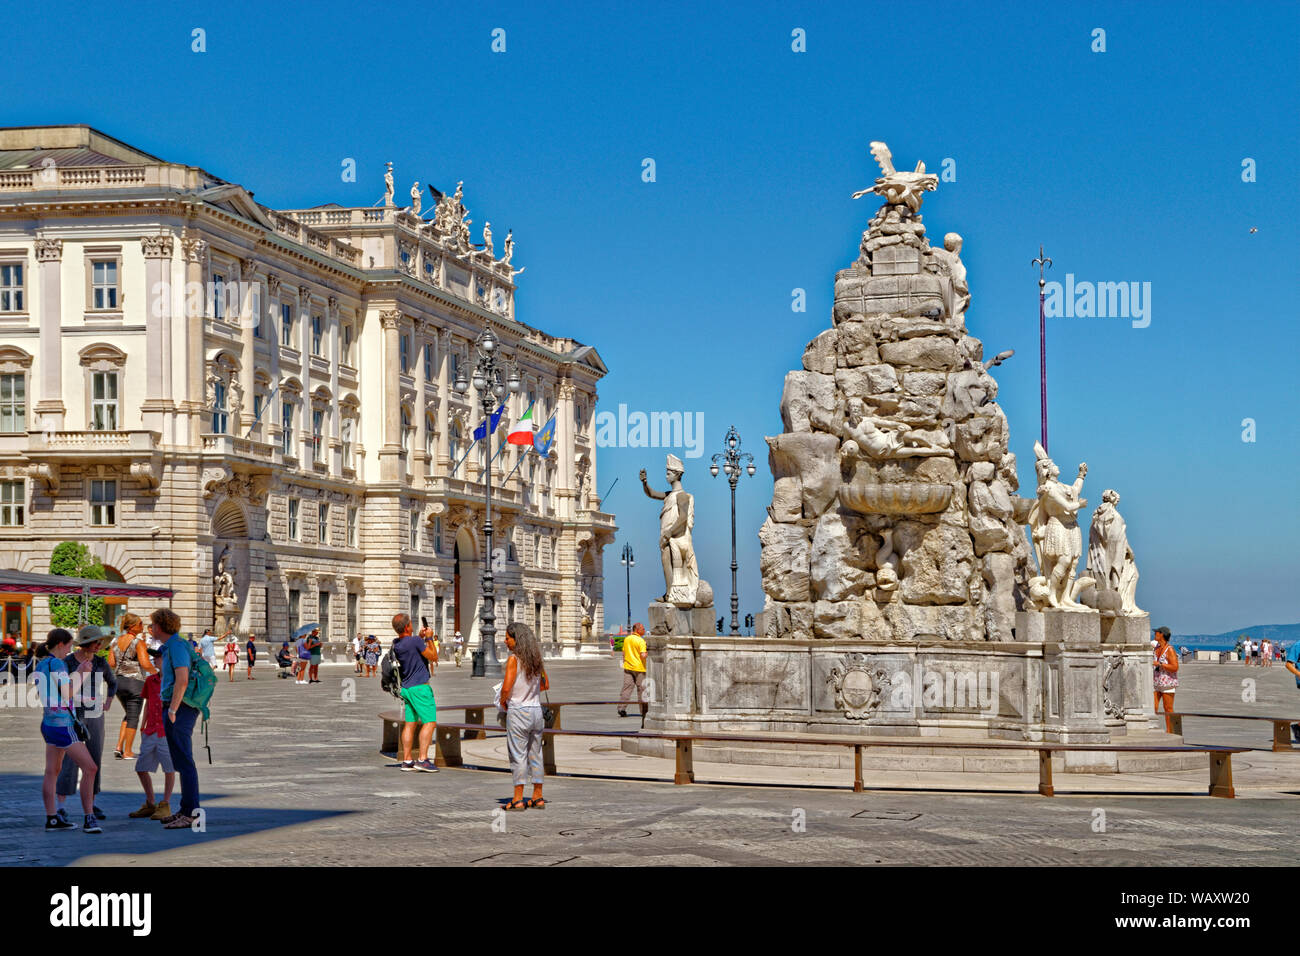 Piazza Unità d'Italia or Unity of Italy Square featuring the Fontana dei Quattro Continenti,or the Fountain of Four Continents in Trieste, Italy. Stock Photo